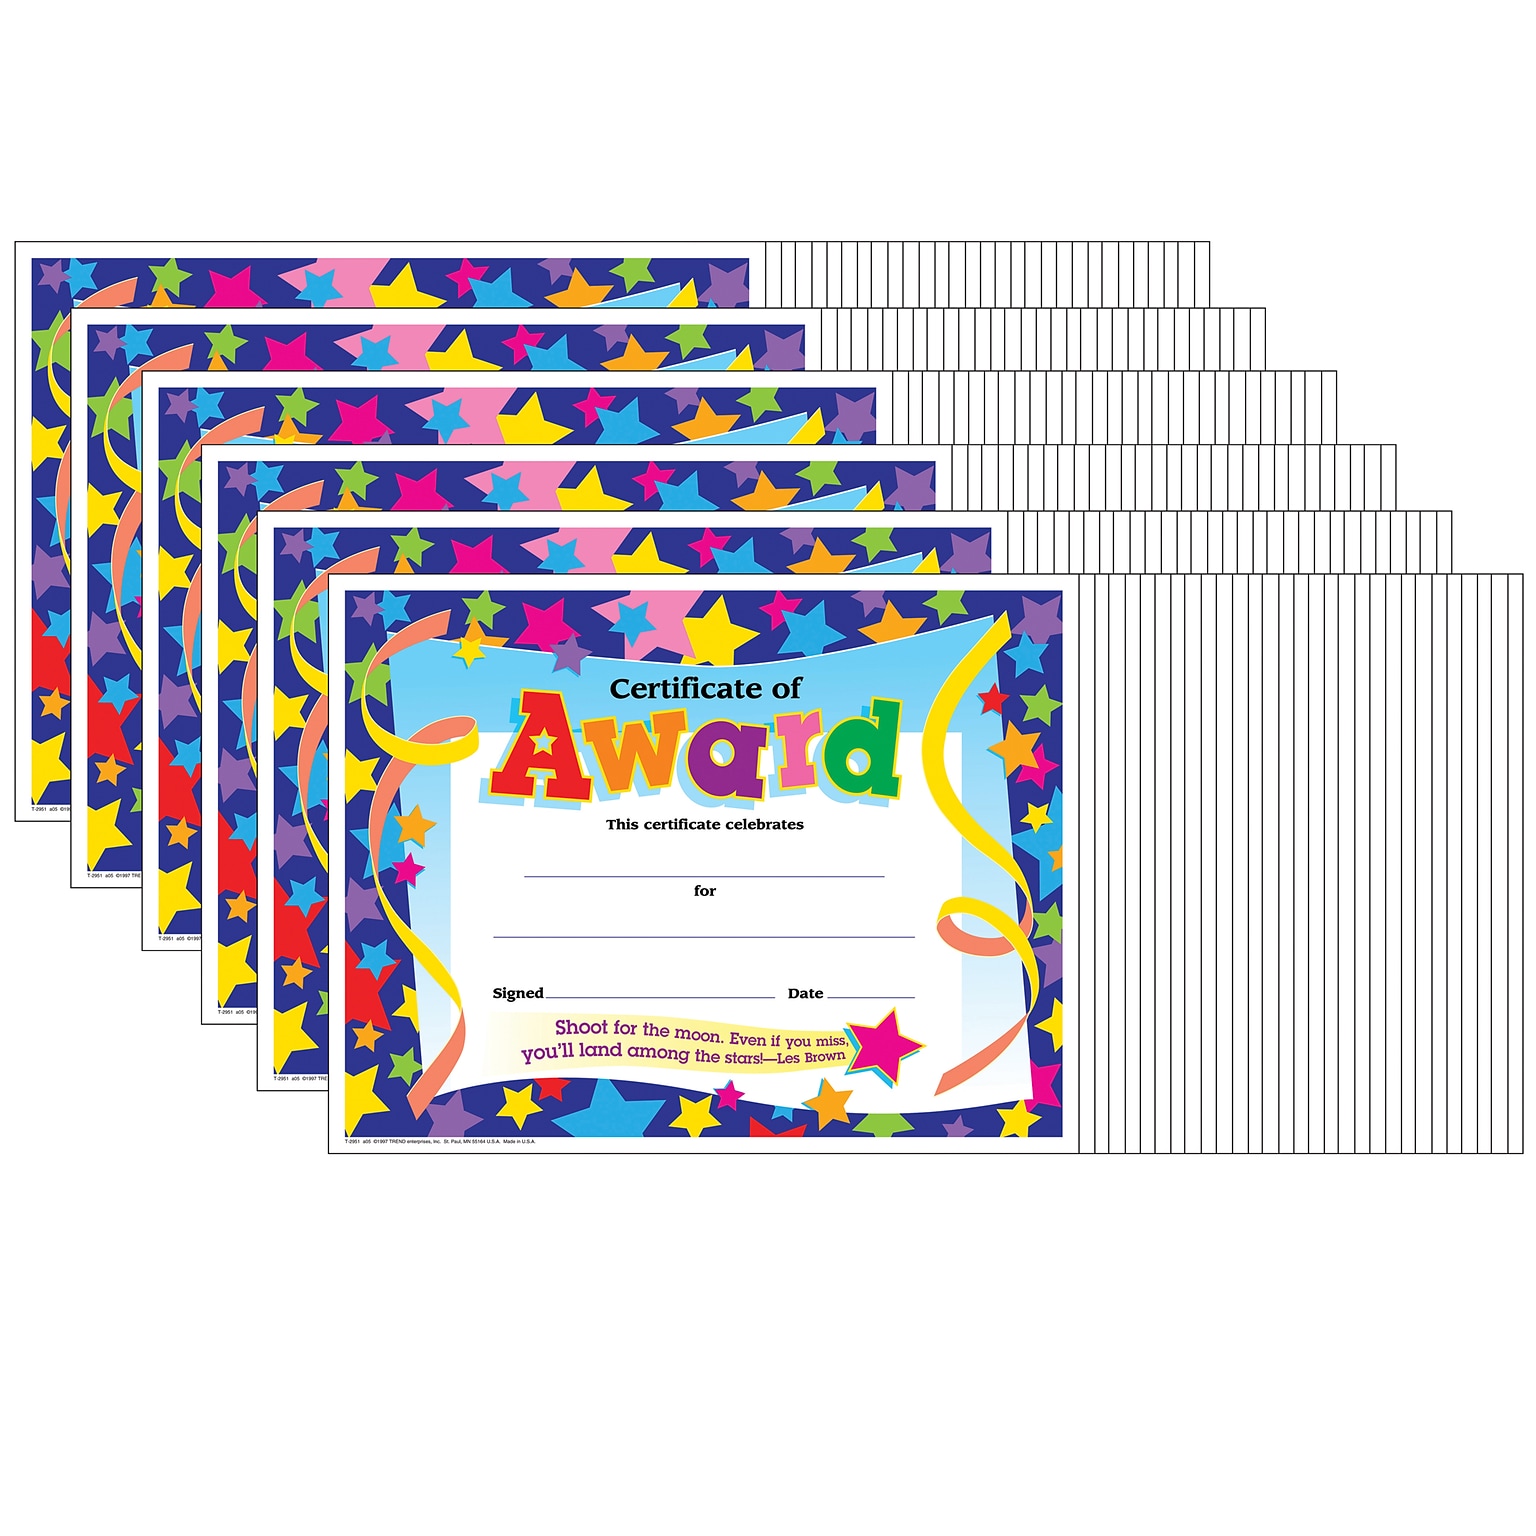 TREND Certificate of Award Colorful Classics Certificates, 30 Per Pack, 6 Packs (T-2951-6)